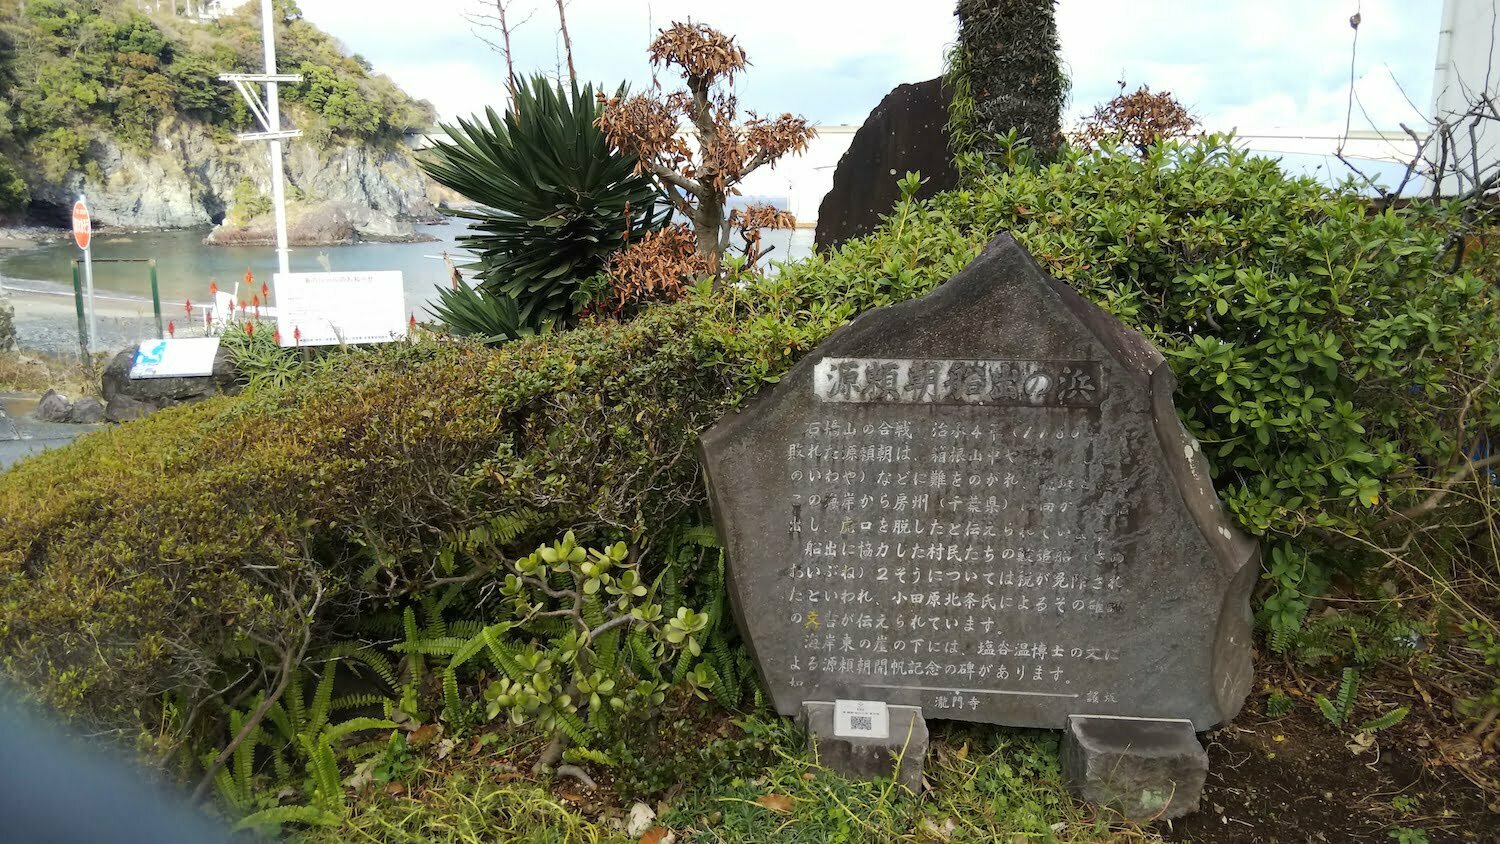 Yoritomo Minamoto boated from here to Kamakura